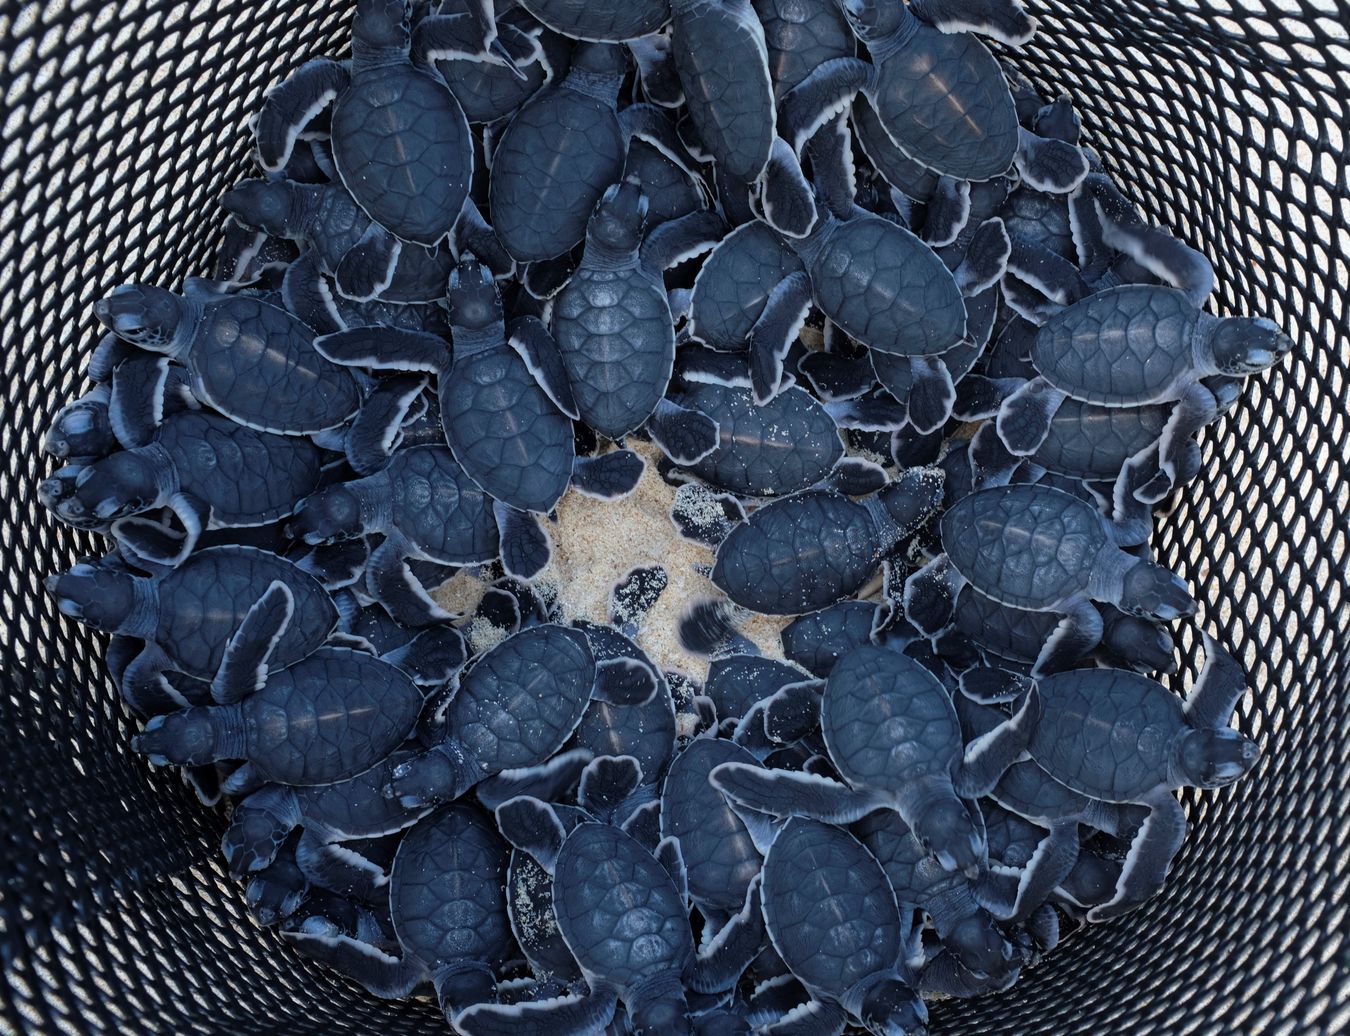 Dozens of newborn green turtles in their individual nest at the hatchery. 